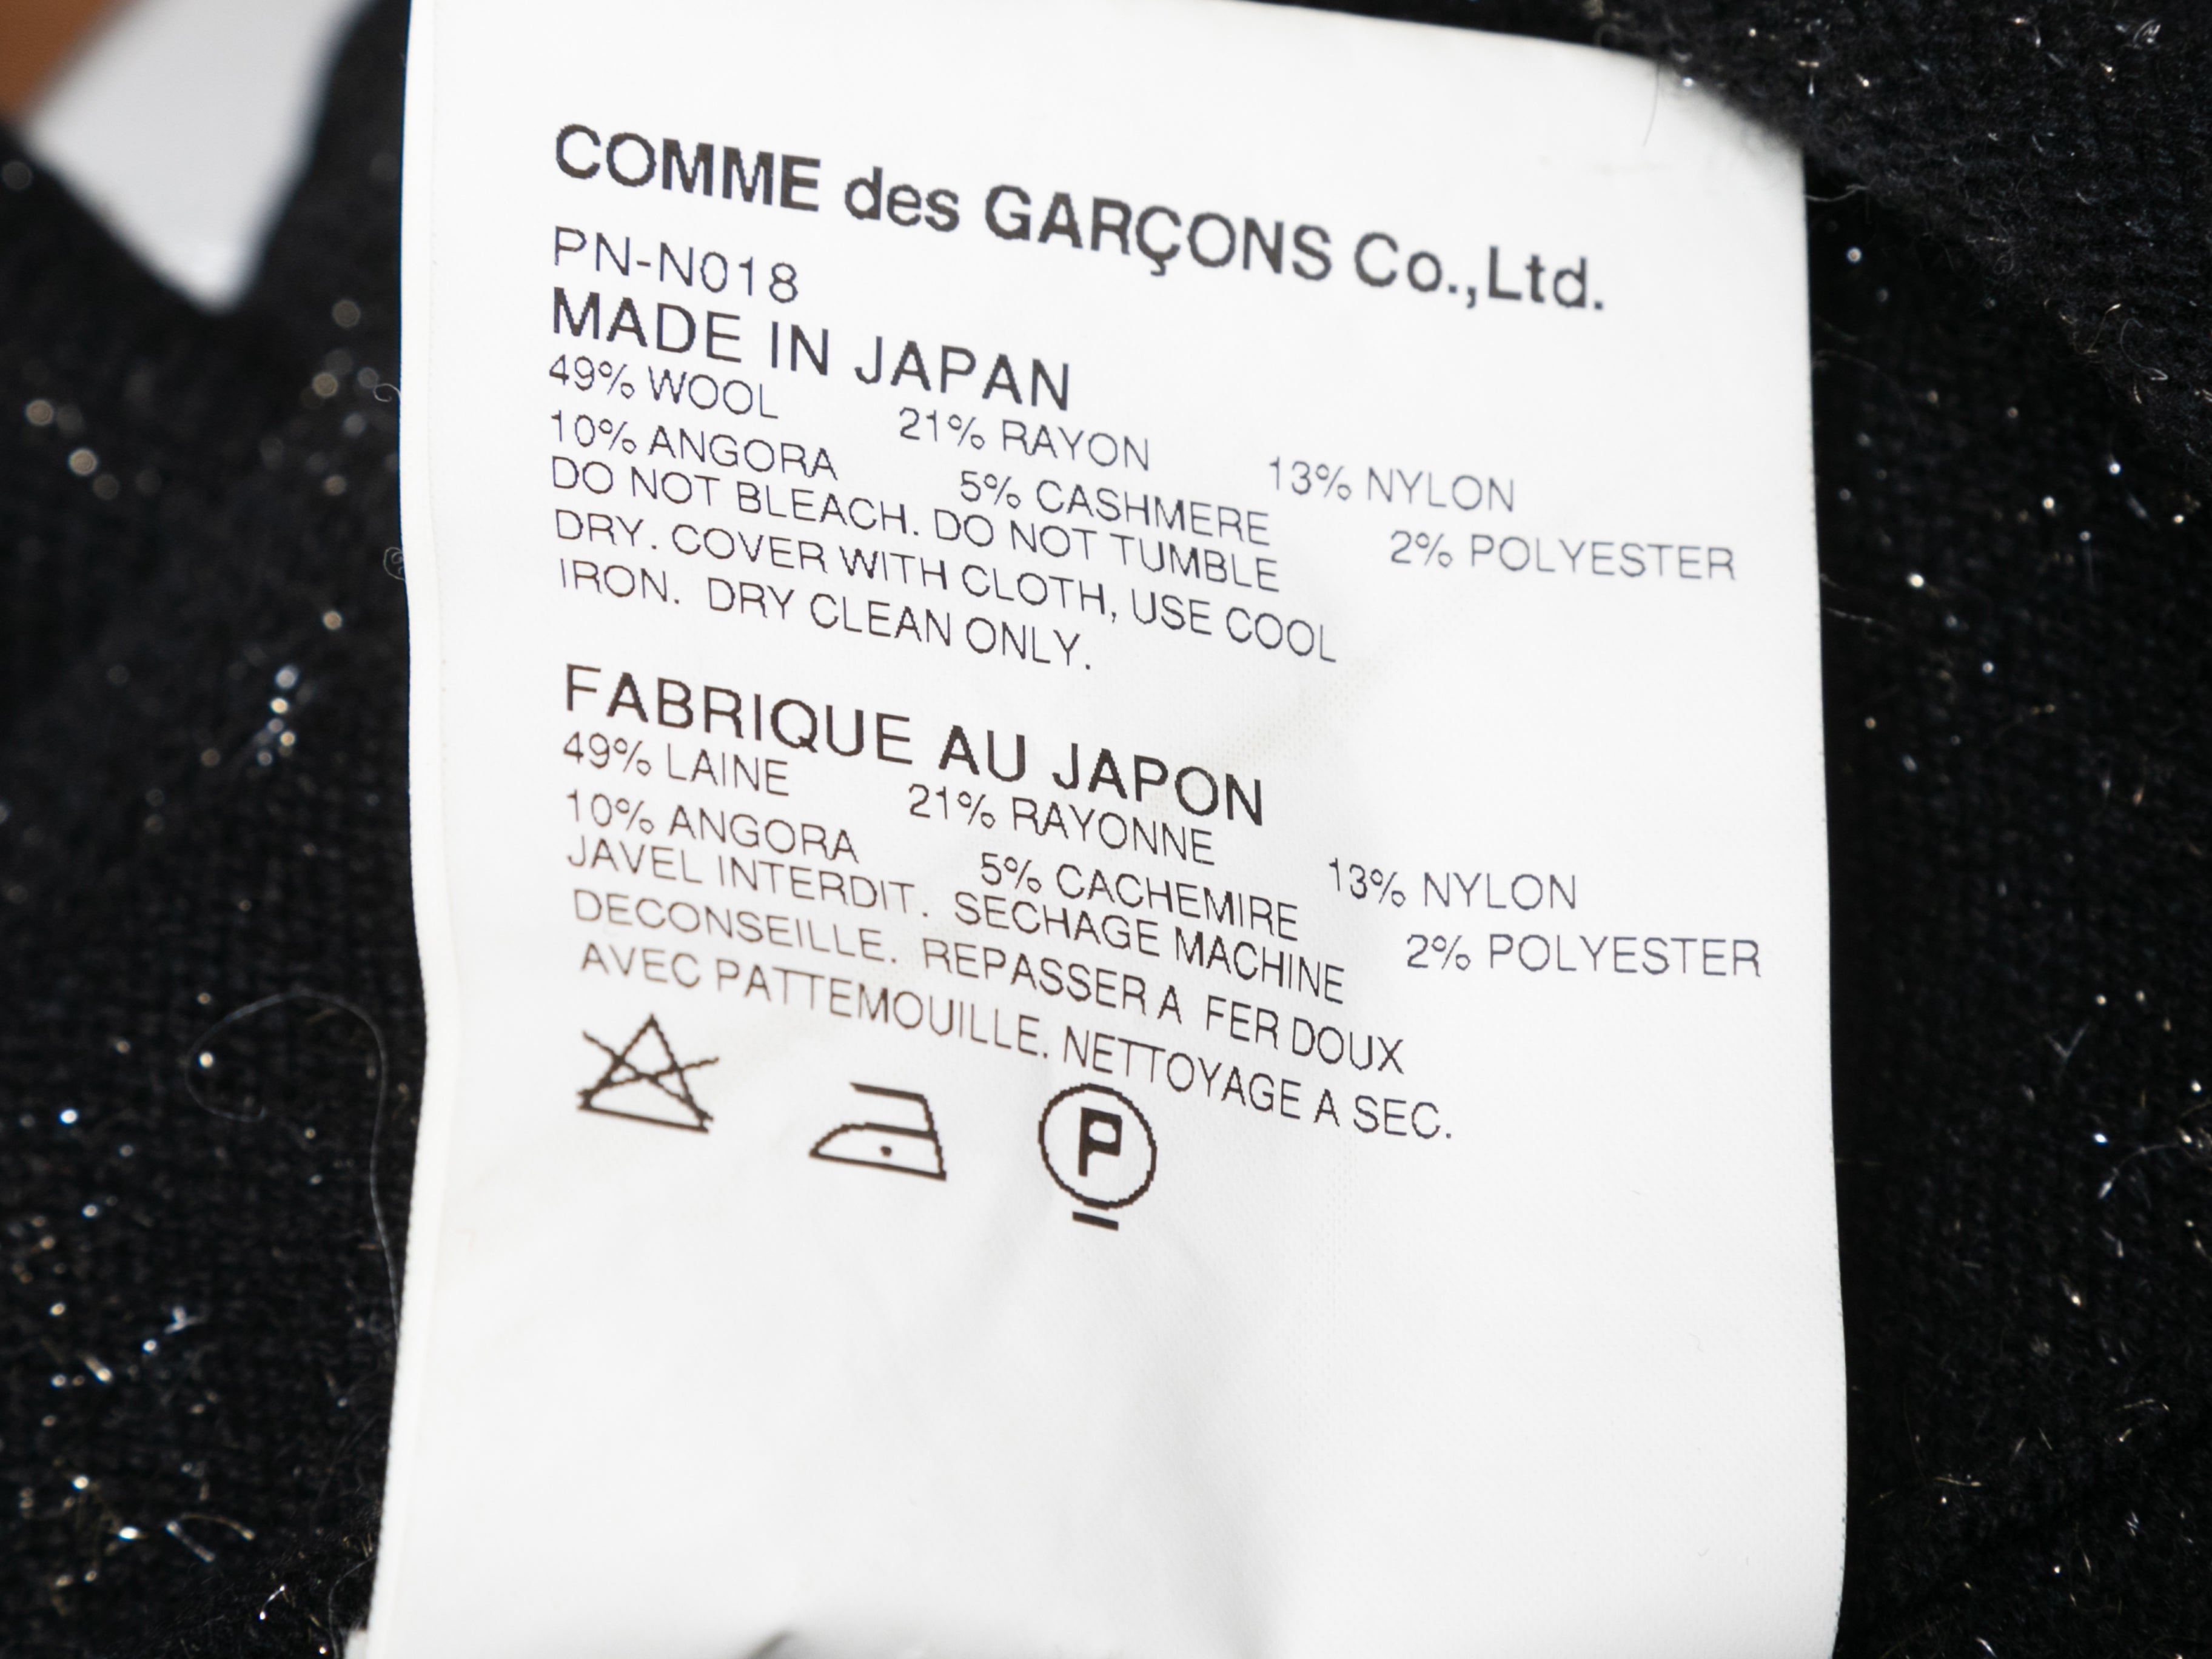 Black Comme Des Garcons Homme Plus Fall/Winter 2014 Wool-Blend Sweater Size US M - Designer Revival